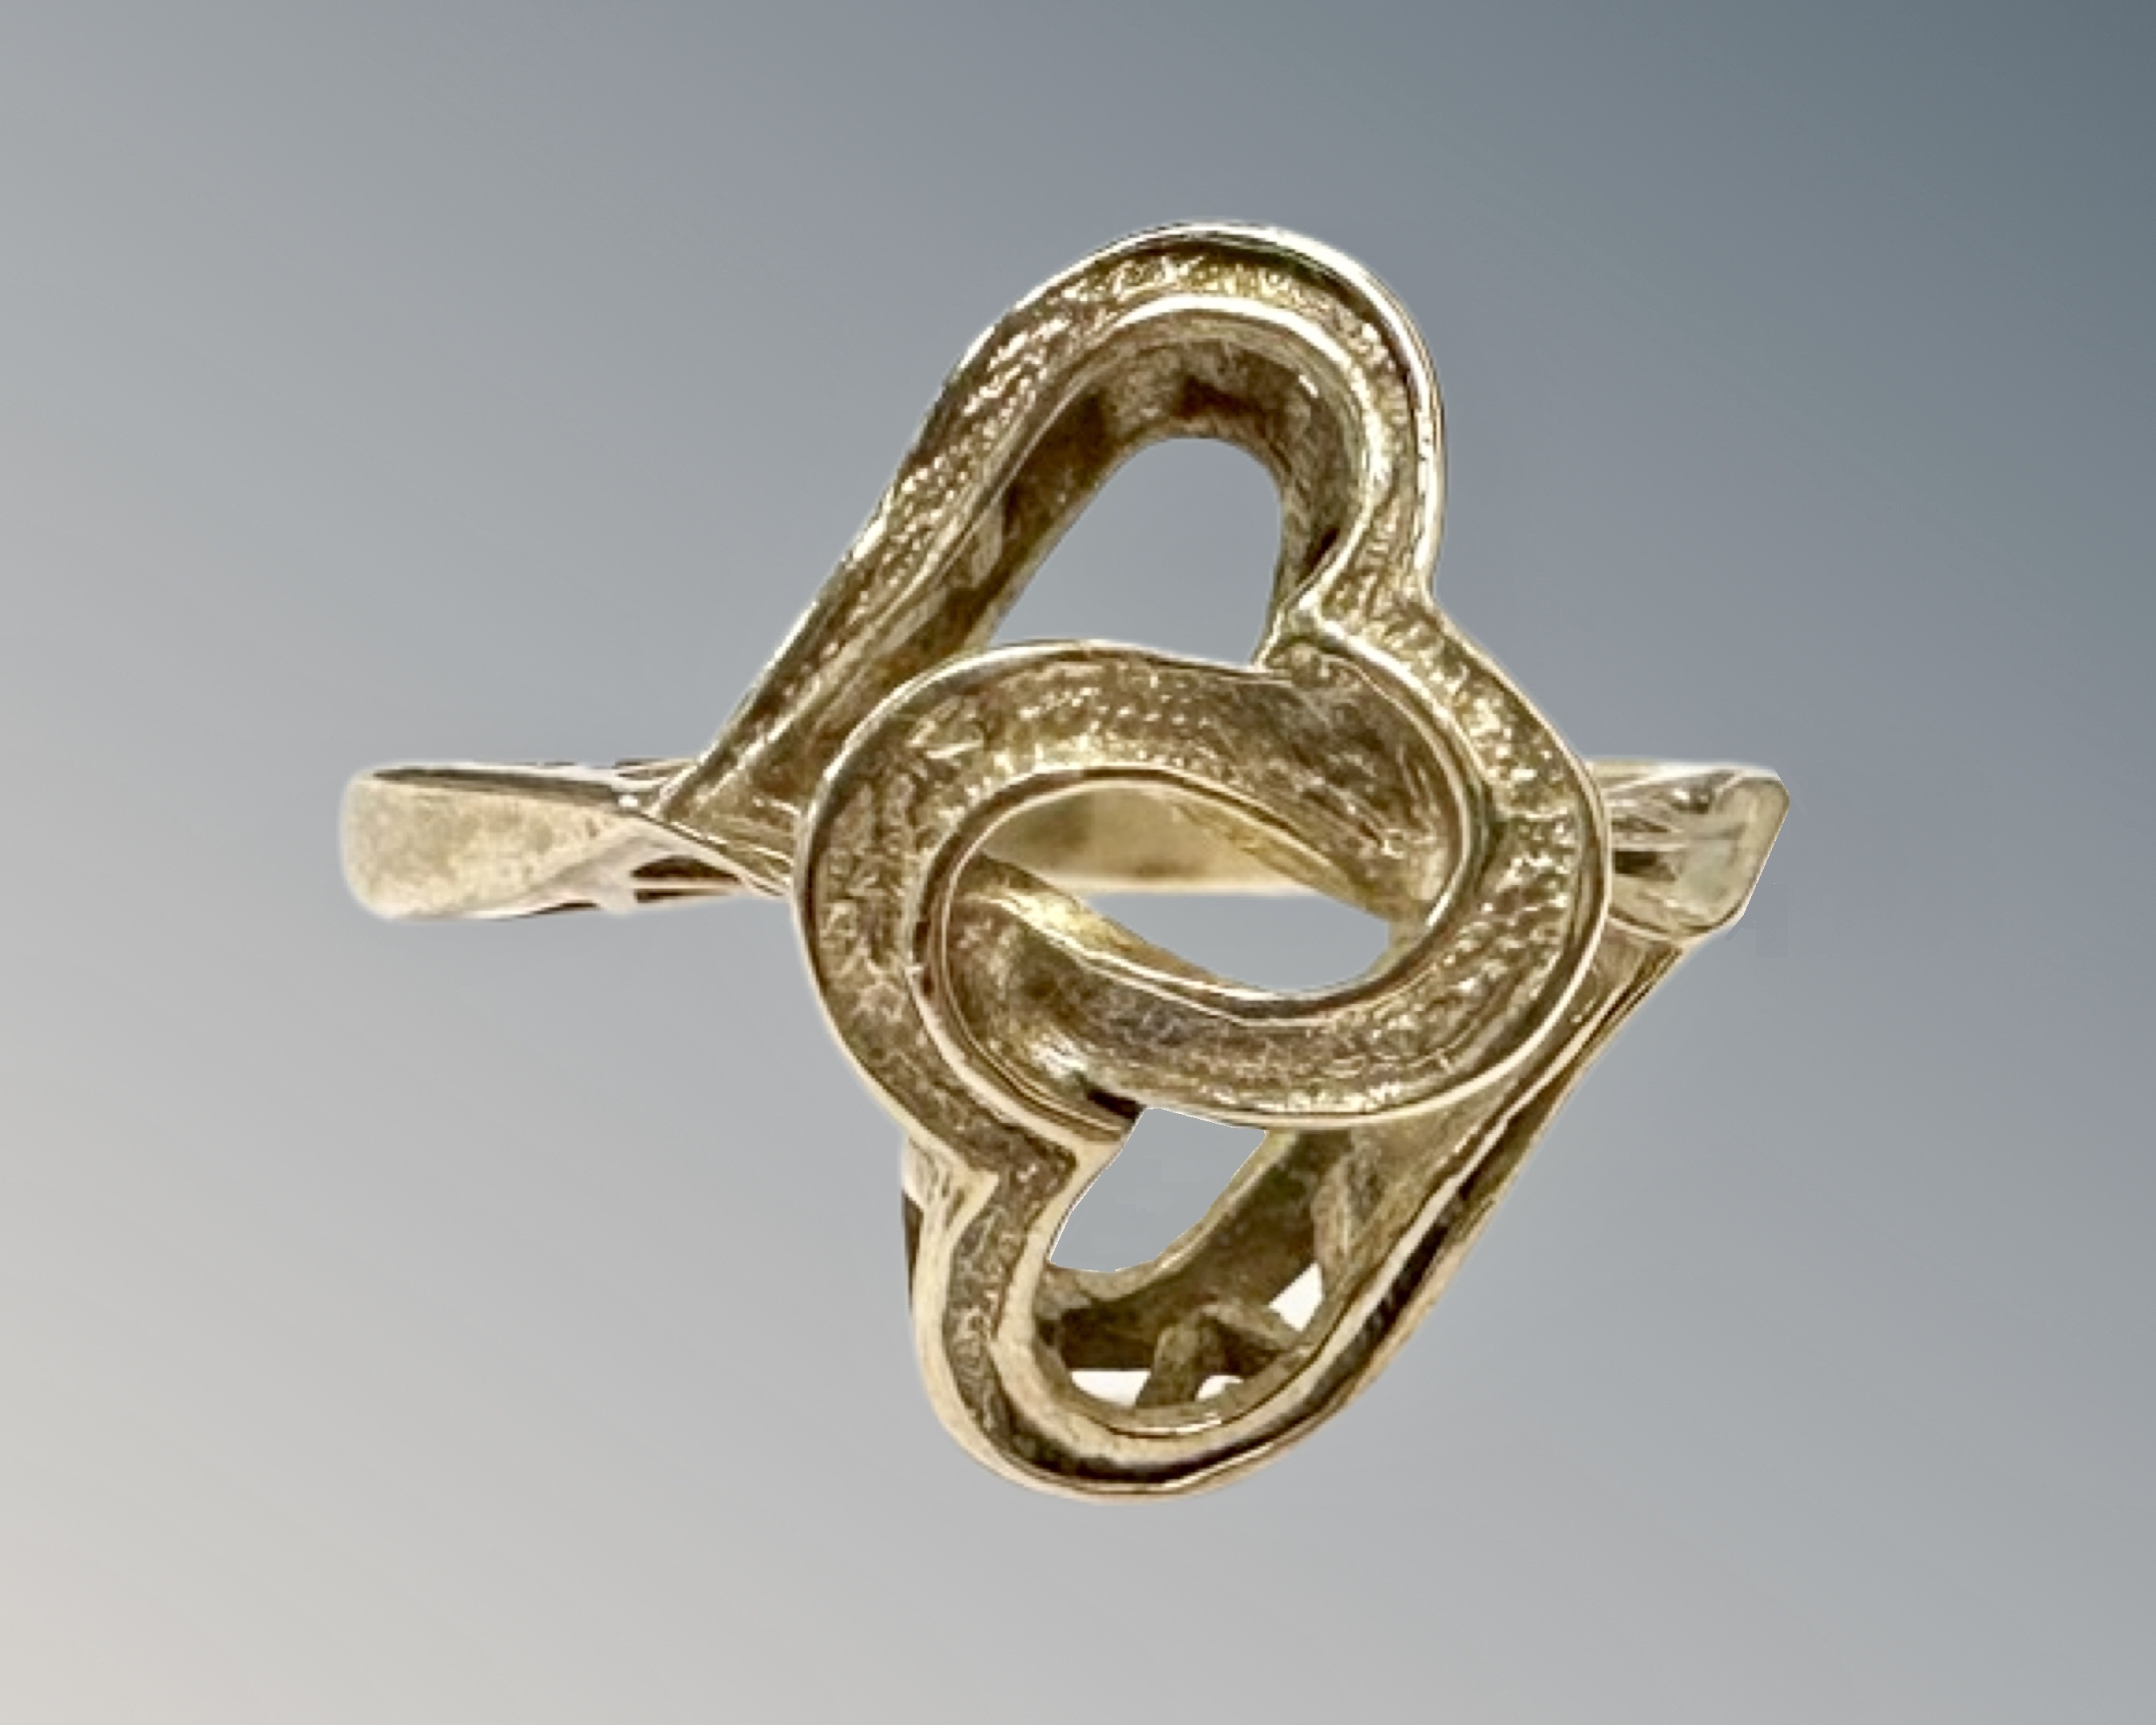 A 9ct yellow gold interlocking heart ring, 2.4g, size J/K.